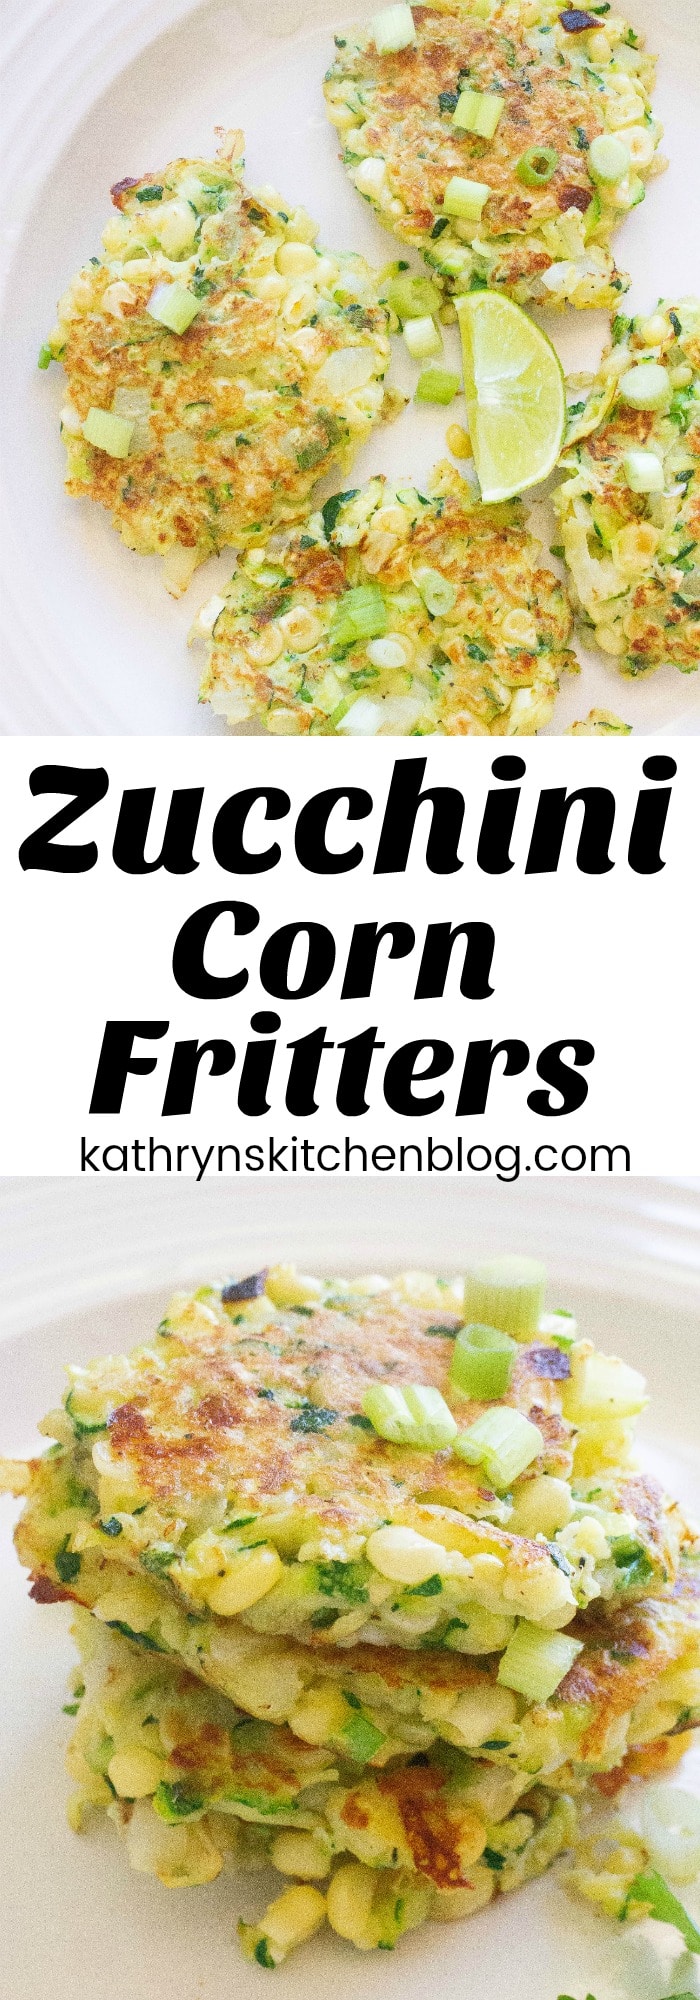 Zucchini Corn Fritters